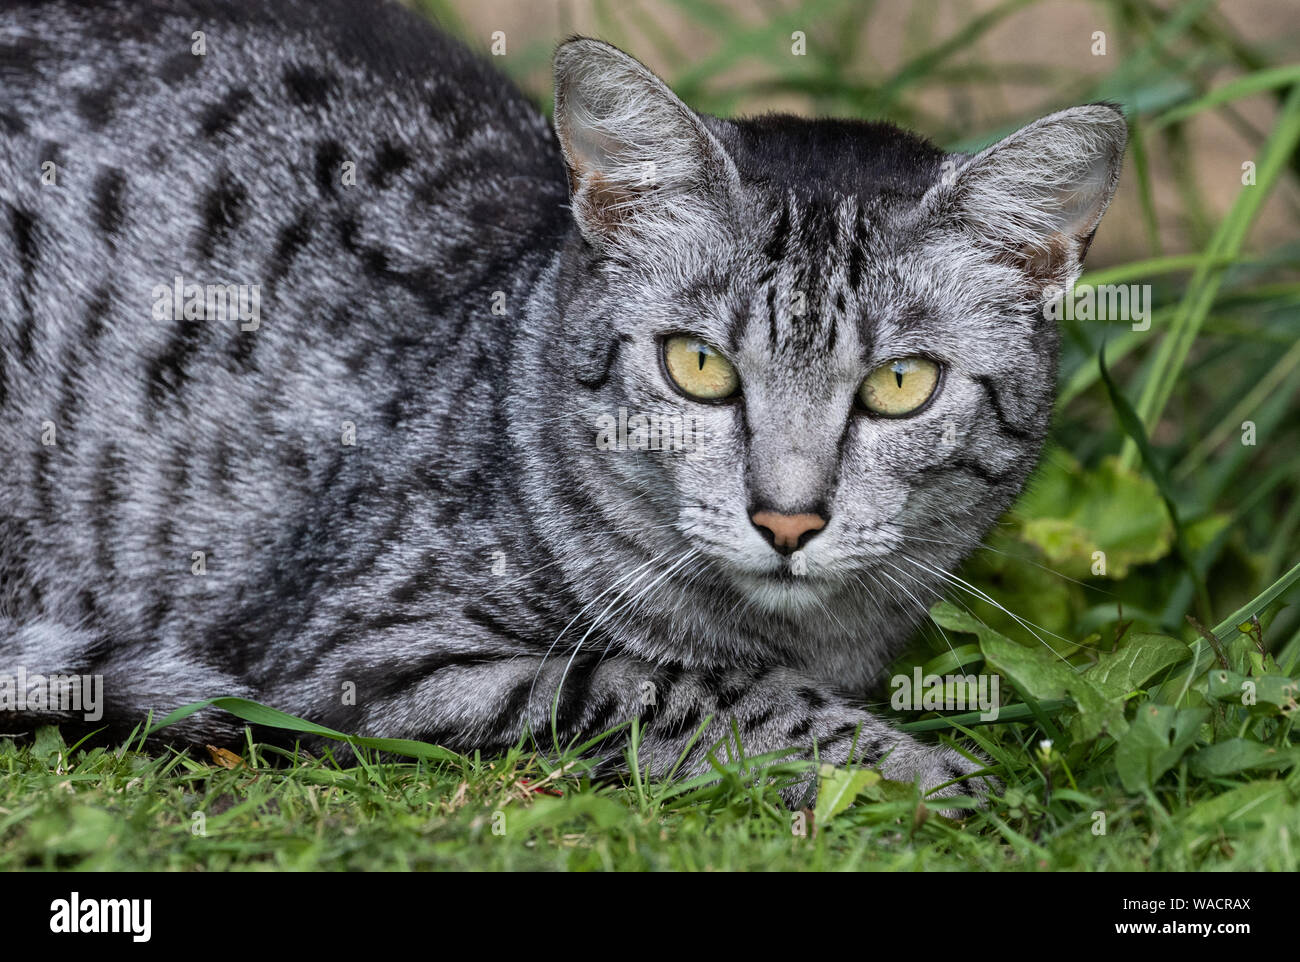 An Egyptian Mau cat close up. Stock Photo